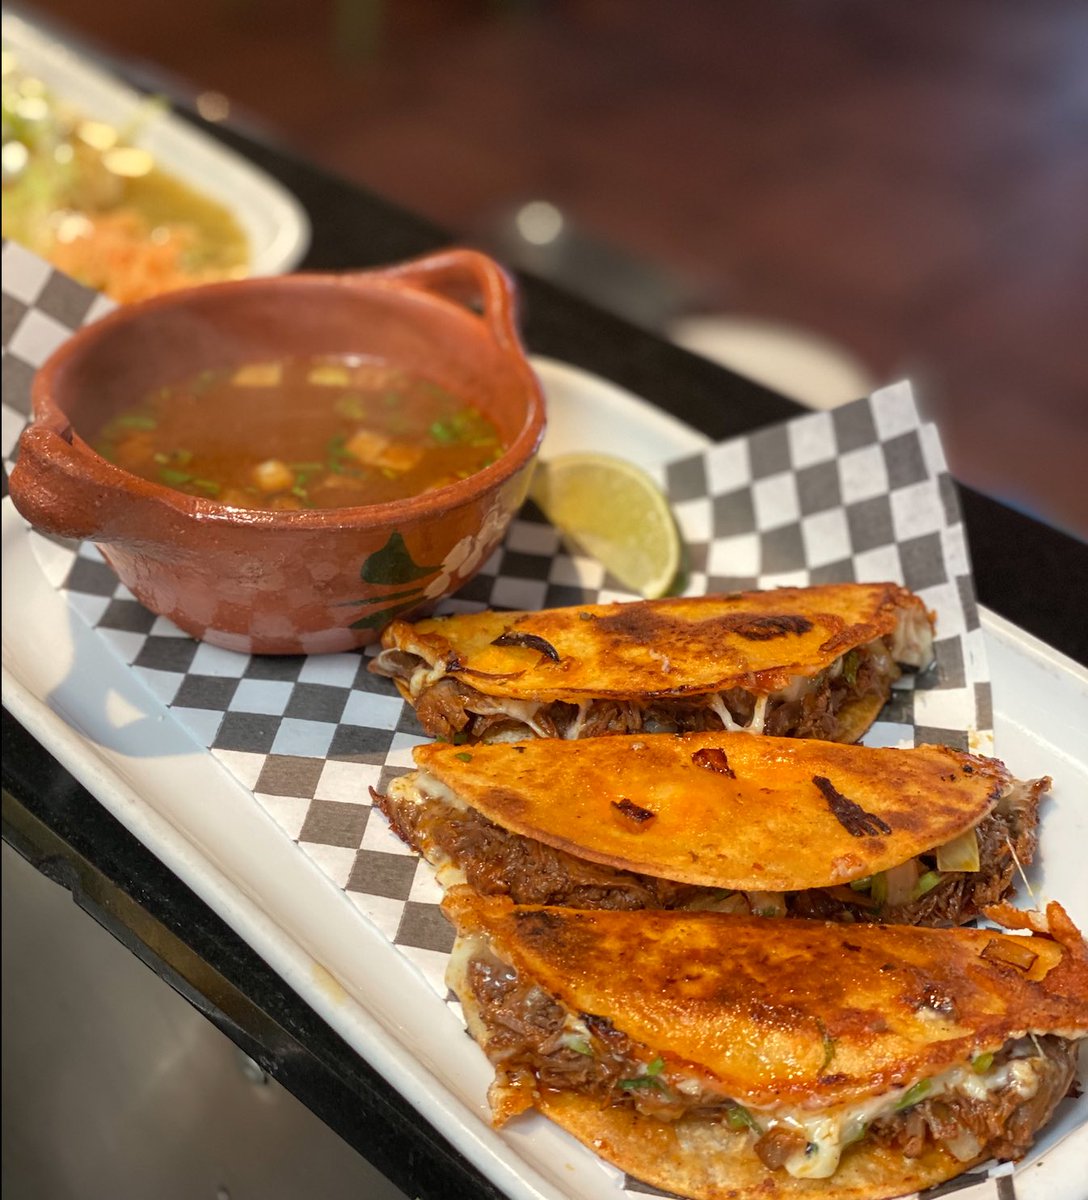 Traditional 🇲🇽 #mexicanfood in #Ottawa for dine-in or #takeout
7 Kakulu #Kanata 📞 613-271-1841
#226Preston 📞 613-695-7811
#Merivale 📞 613-695-7899

casa-mexico.ca

#ottnews #ottawafoodies #weekend #tacos #littleitaly